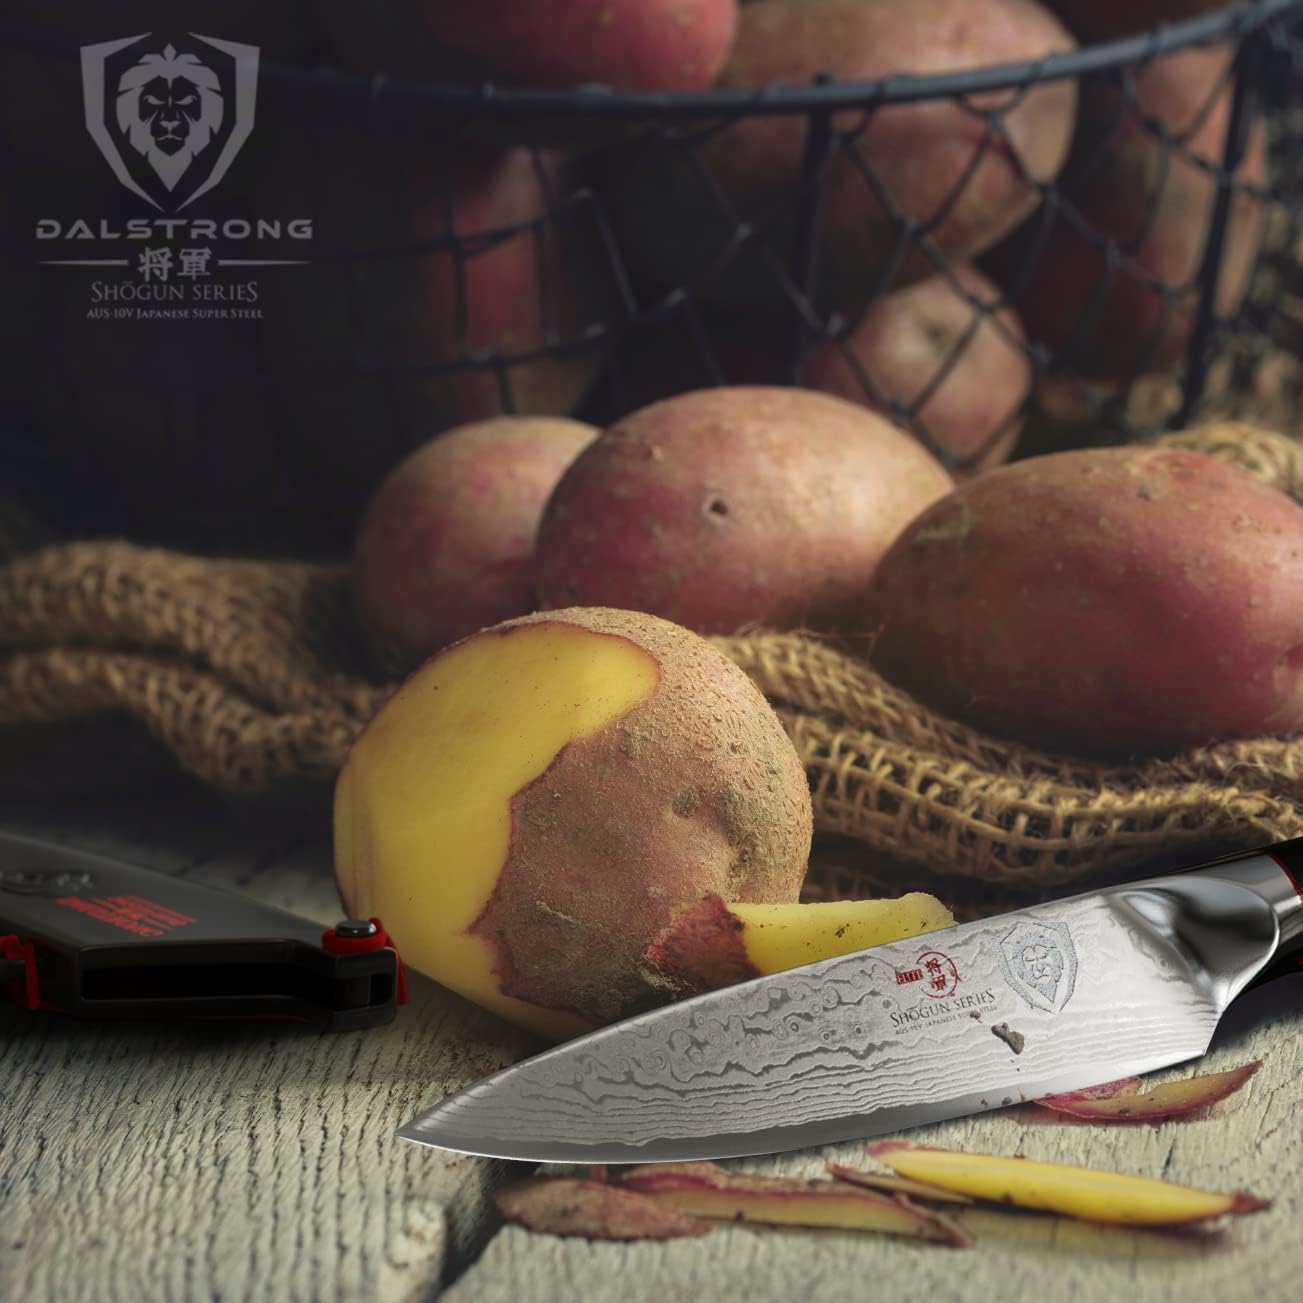 Dalstrong Paring Knife - 3.5 inch - Shogun Series ELITE - Damascus - AUS-10V Japanese Super Steel Kitchen Knife - Vacuum Treated - Vegetable, Fruit Knife - Razor Sharp Cooking Chefs Knife - w/Sheath